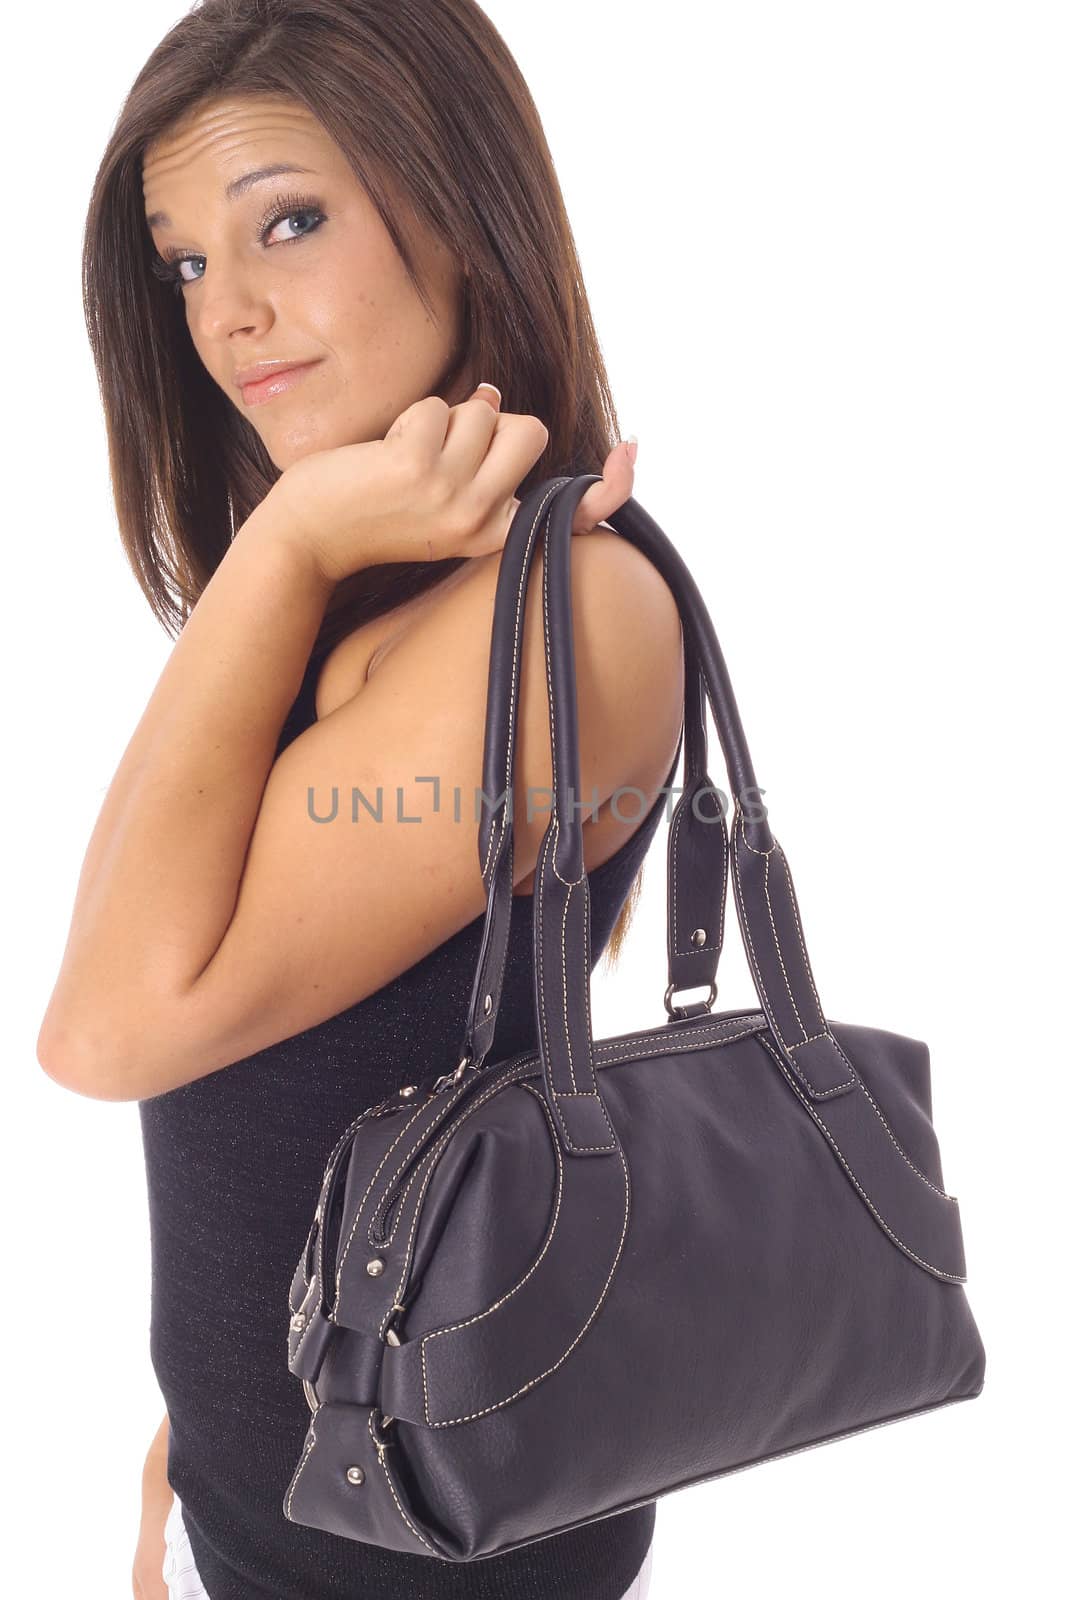 latino model carrying fashion bag